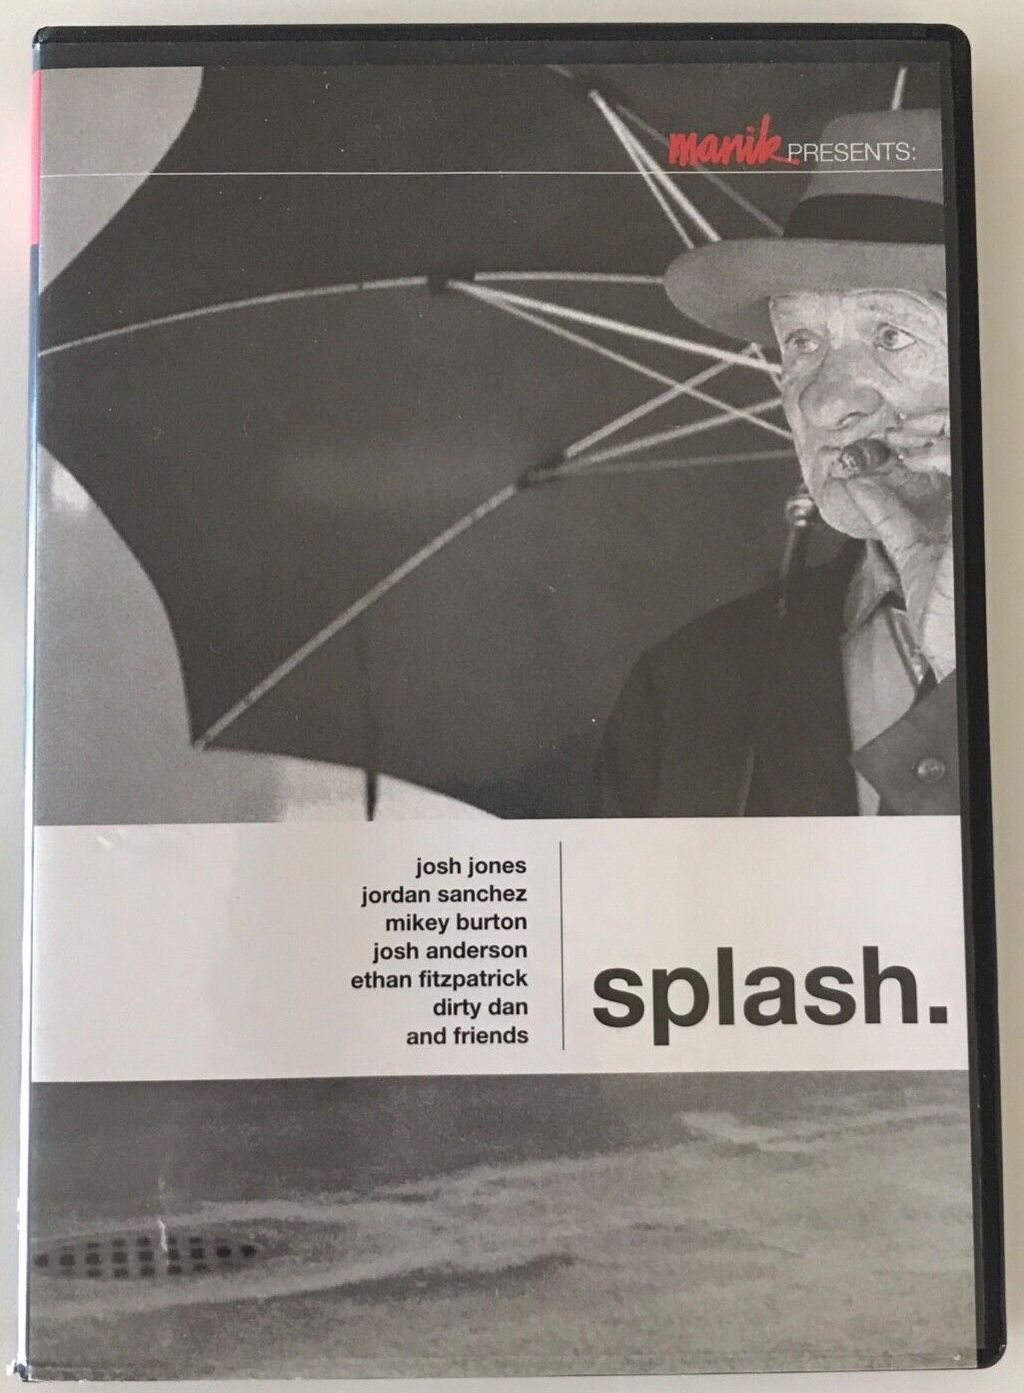 Manik - Splash cover art